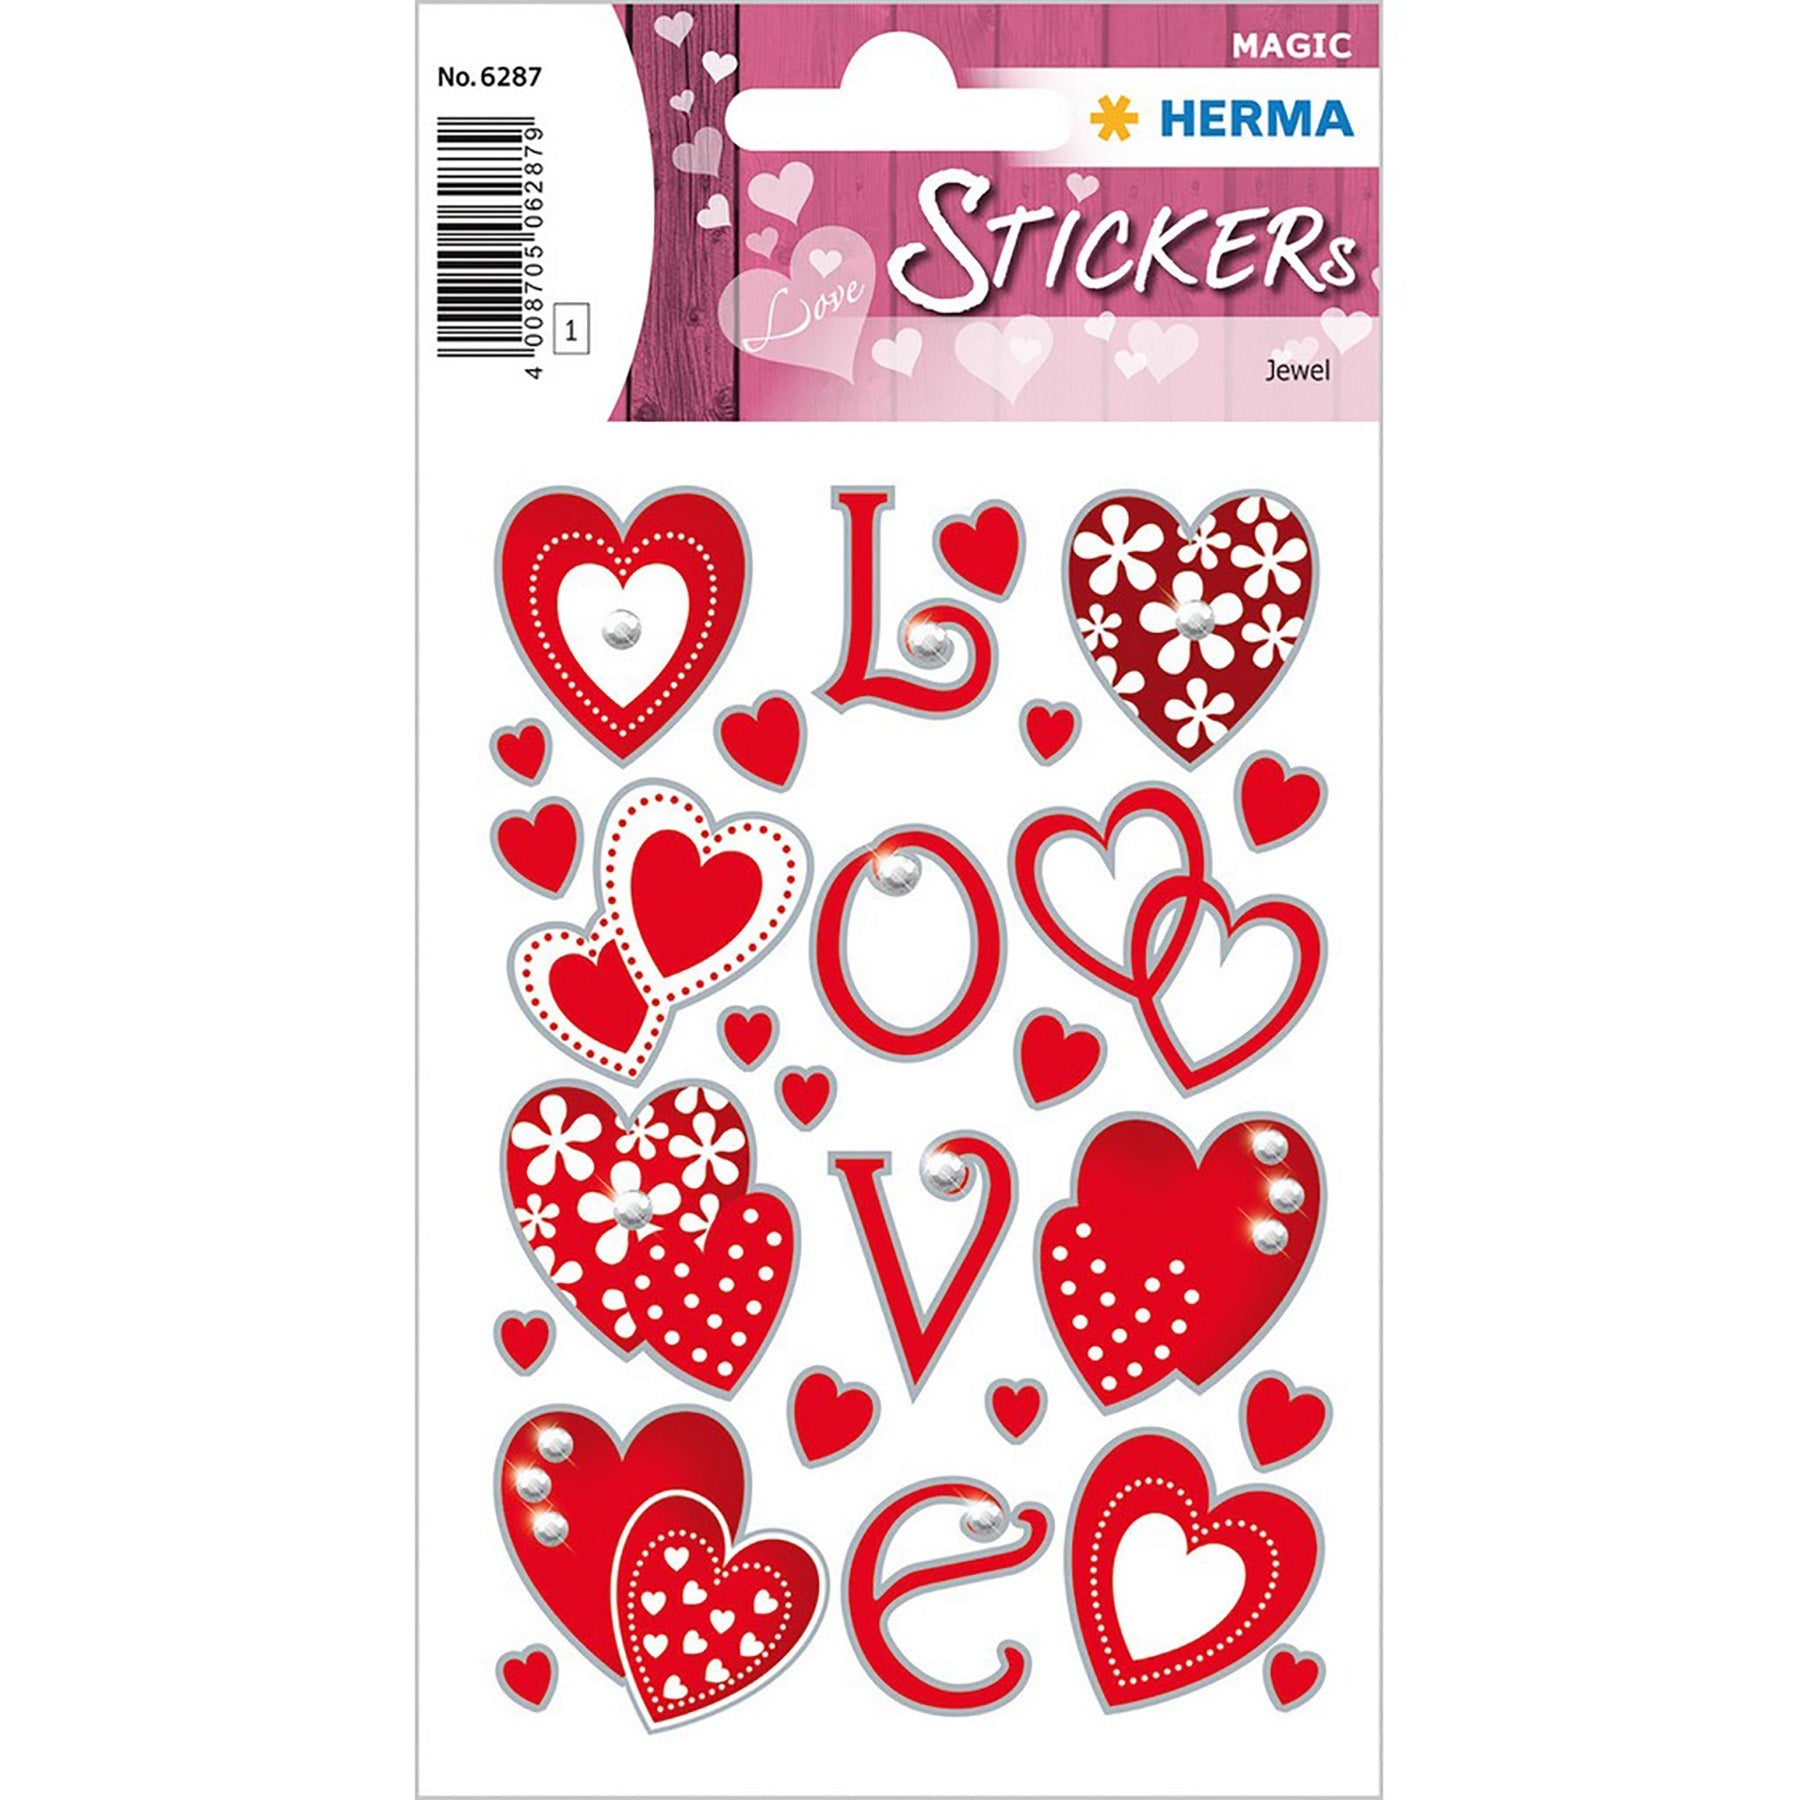 Herma Magic Stickers Love with Jewel 4.75x3.1in Sheet